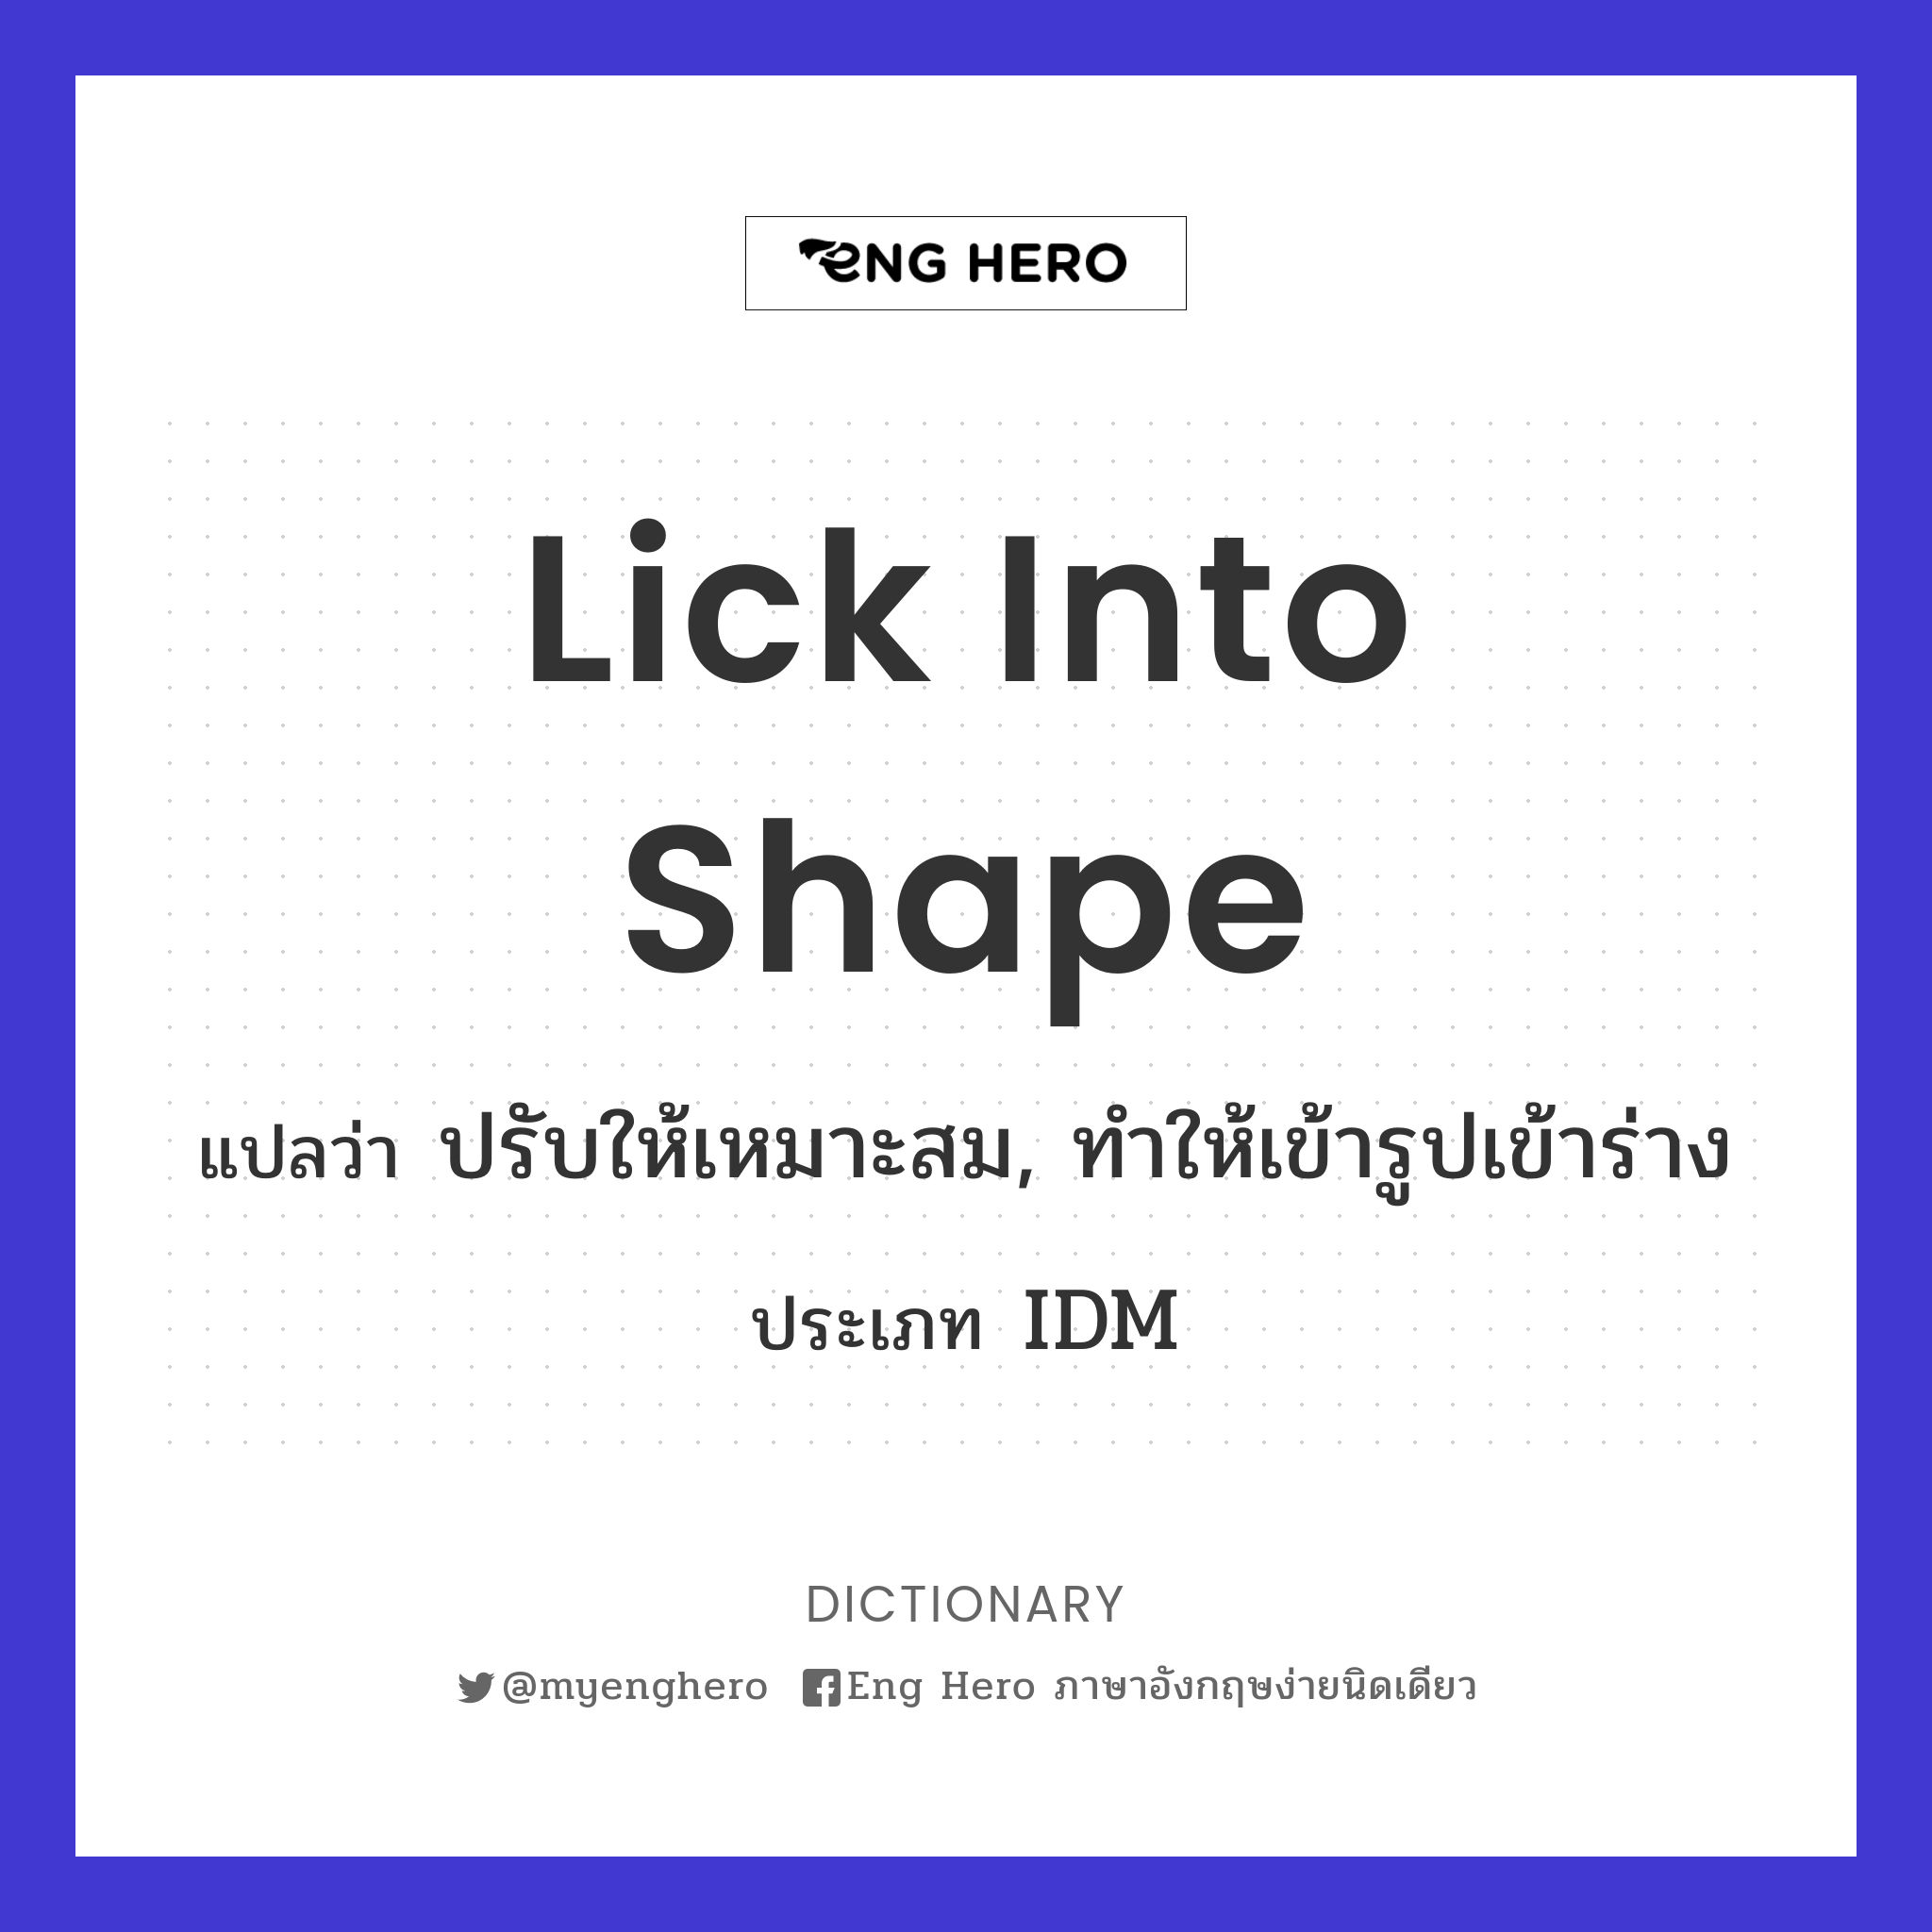 lick into shape